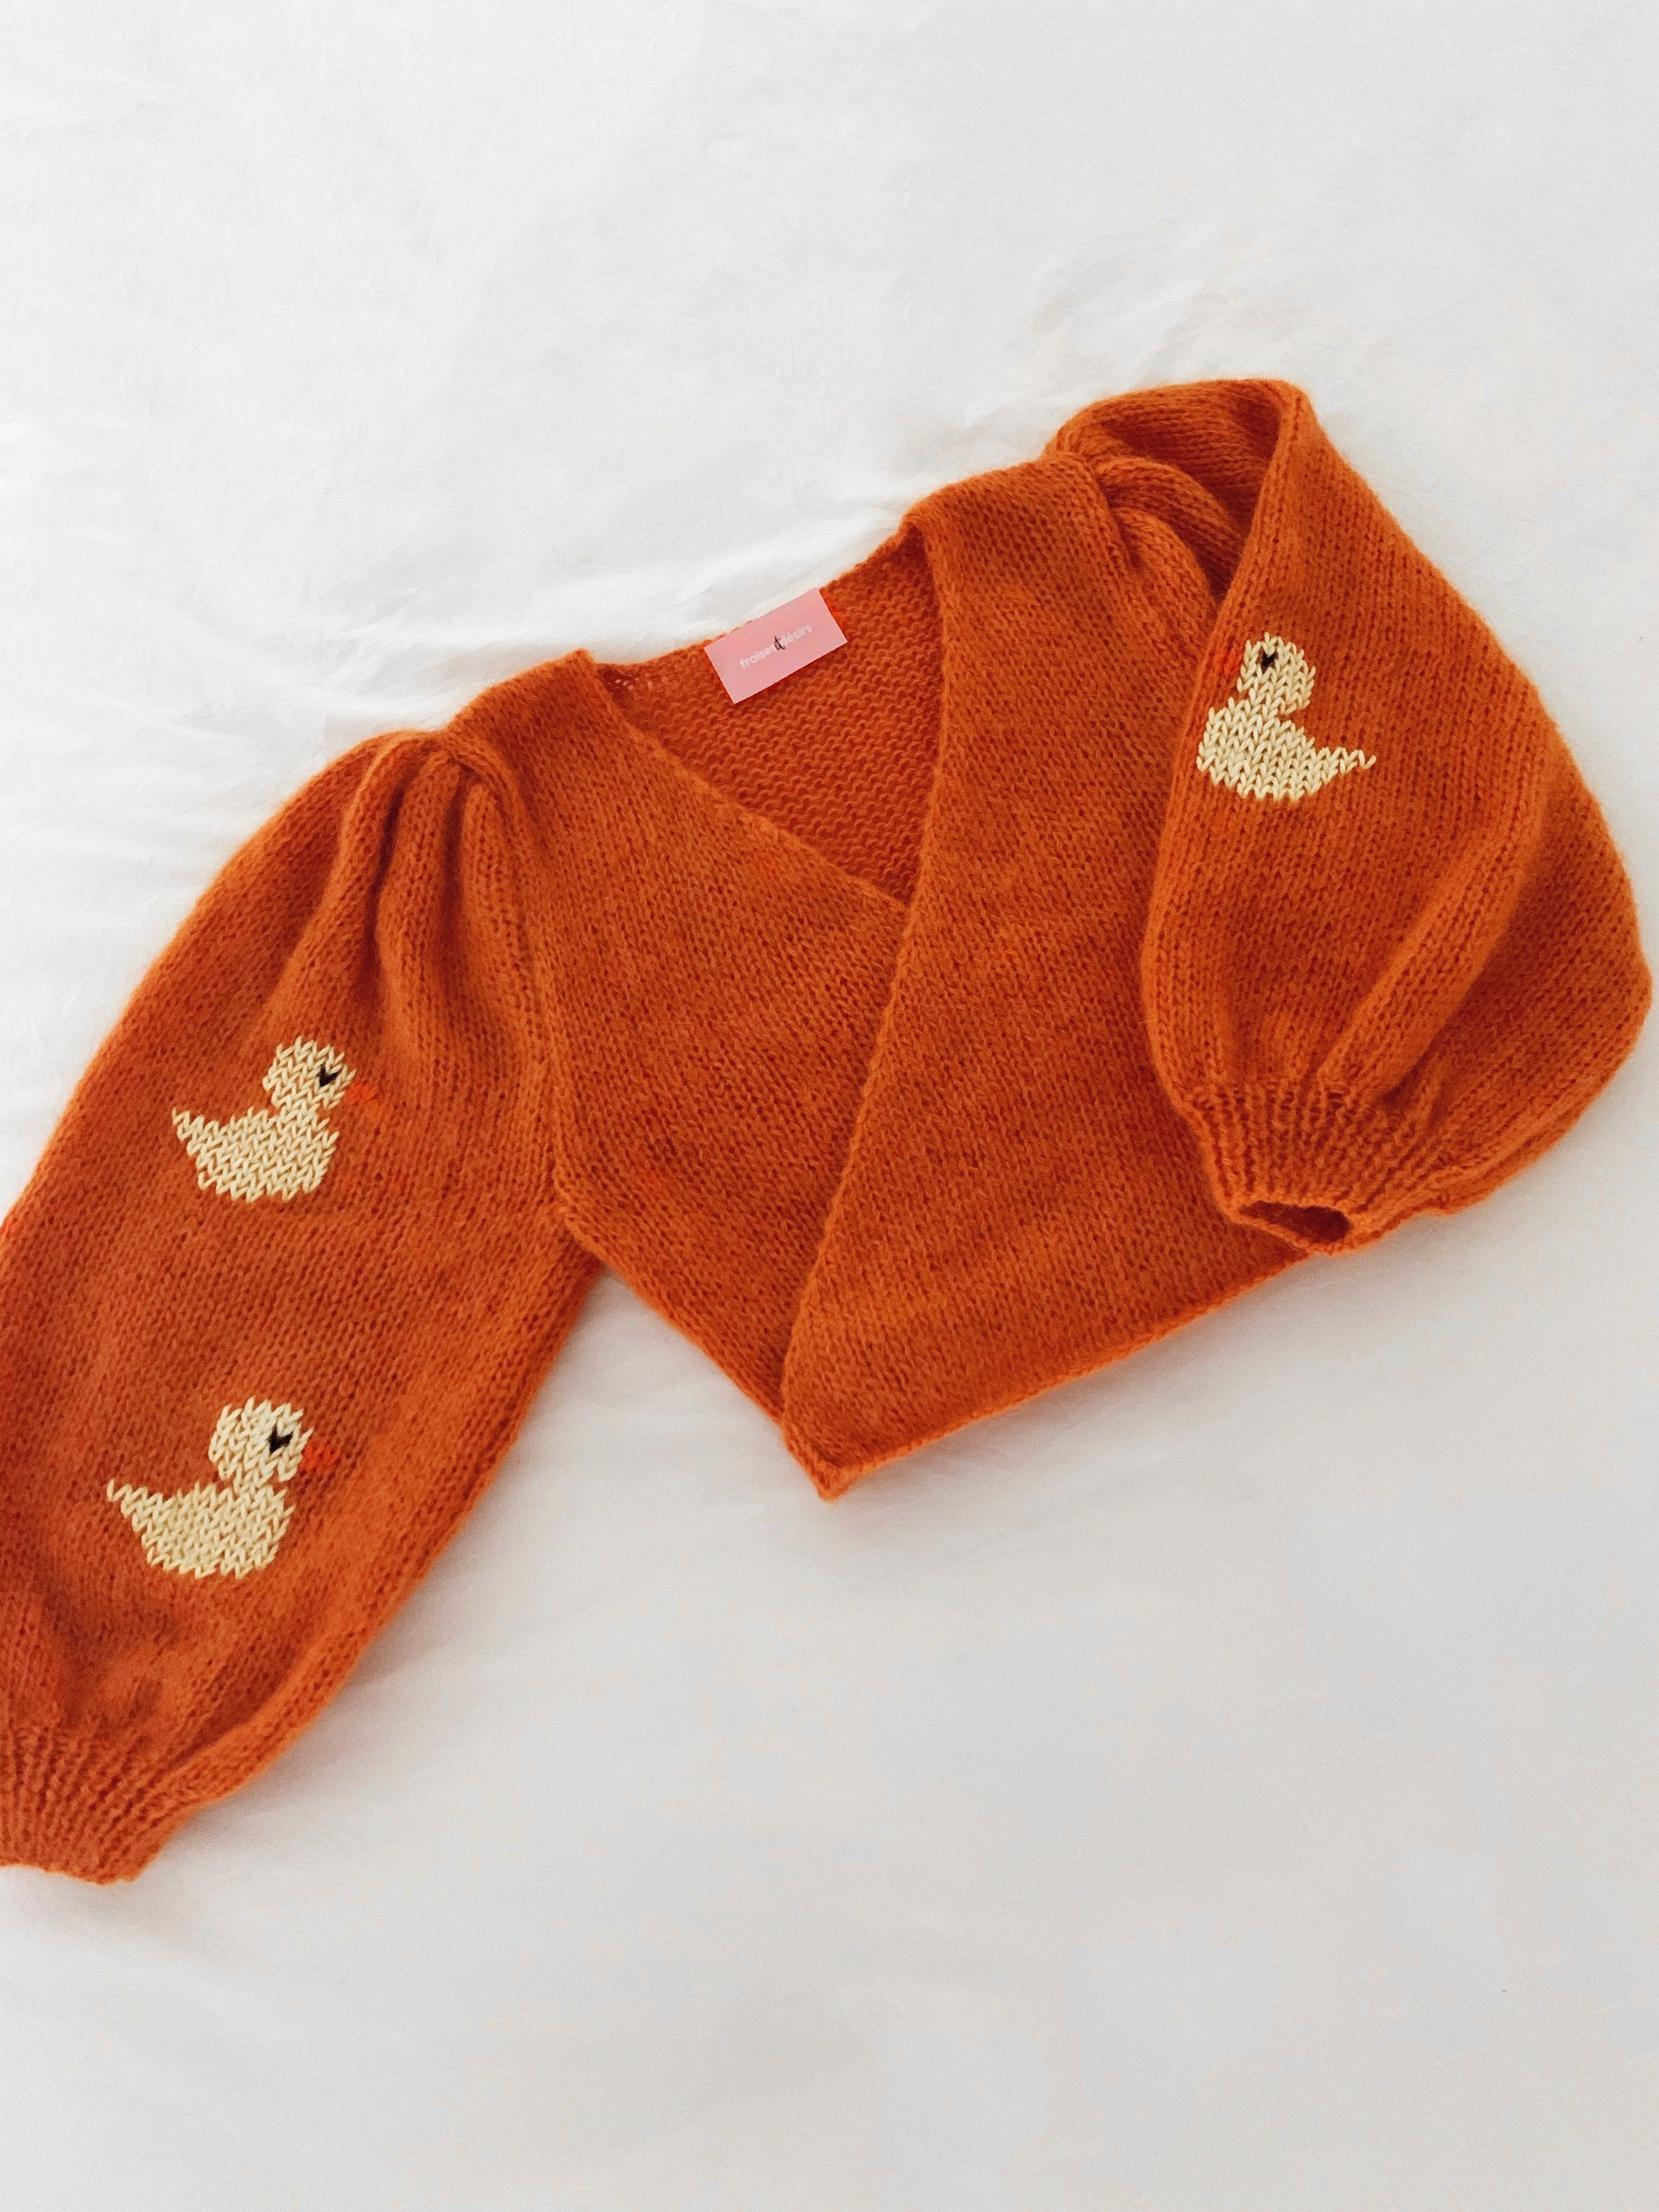 Daisy Duck crossover sweater